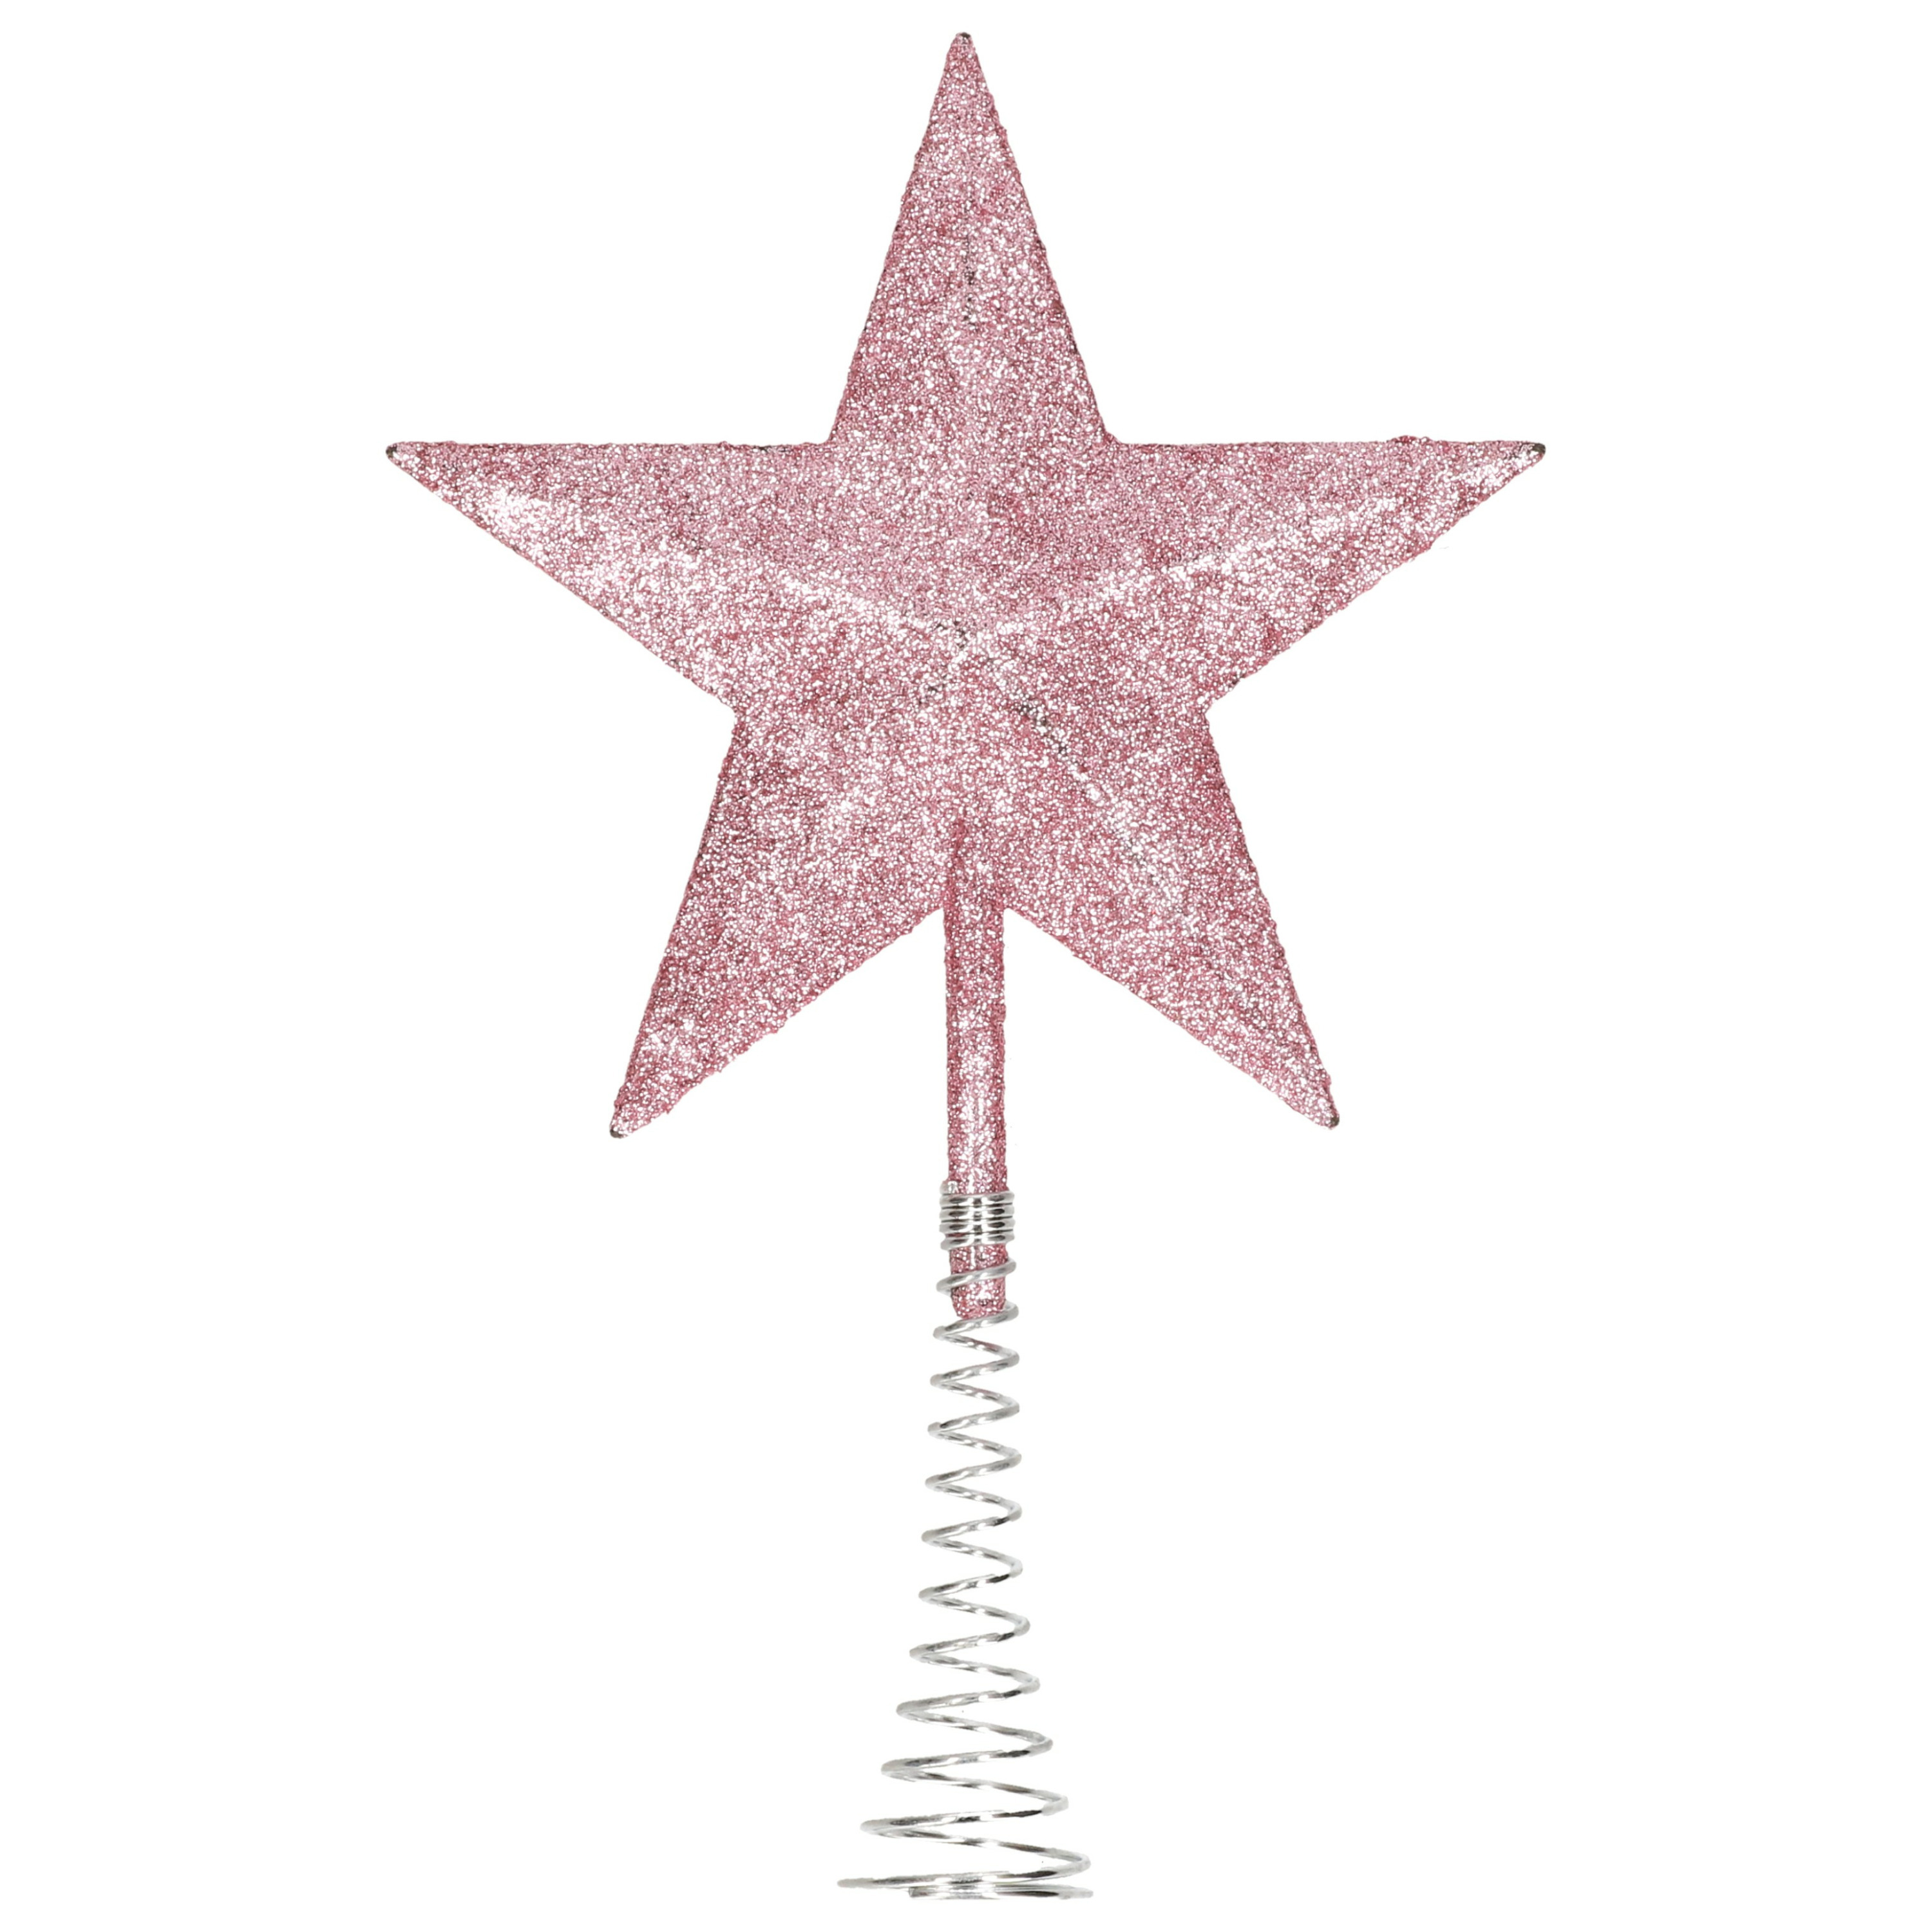 Kunststof kerstboom ster piek glitter roze 20 cm